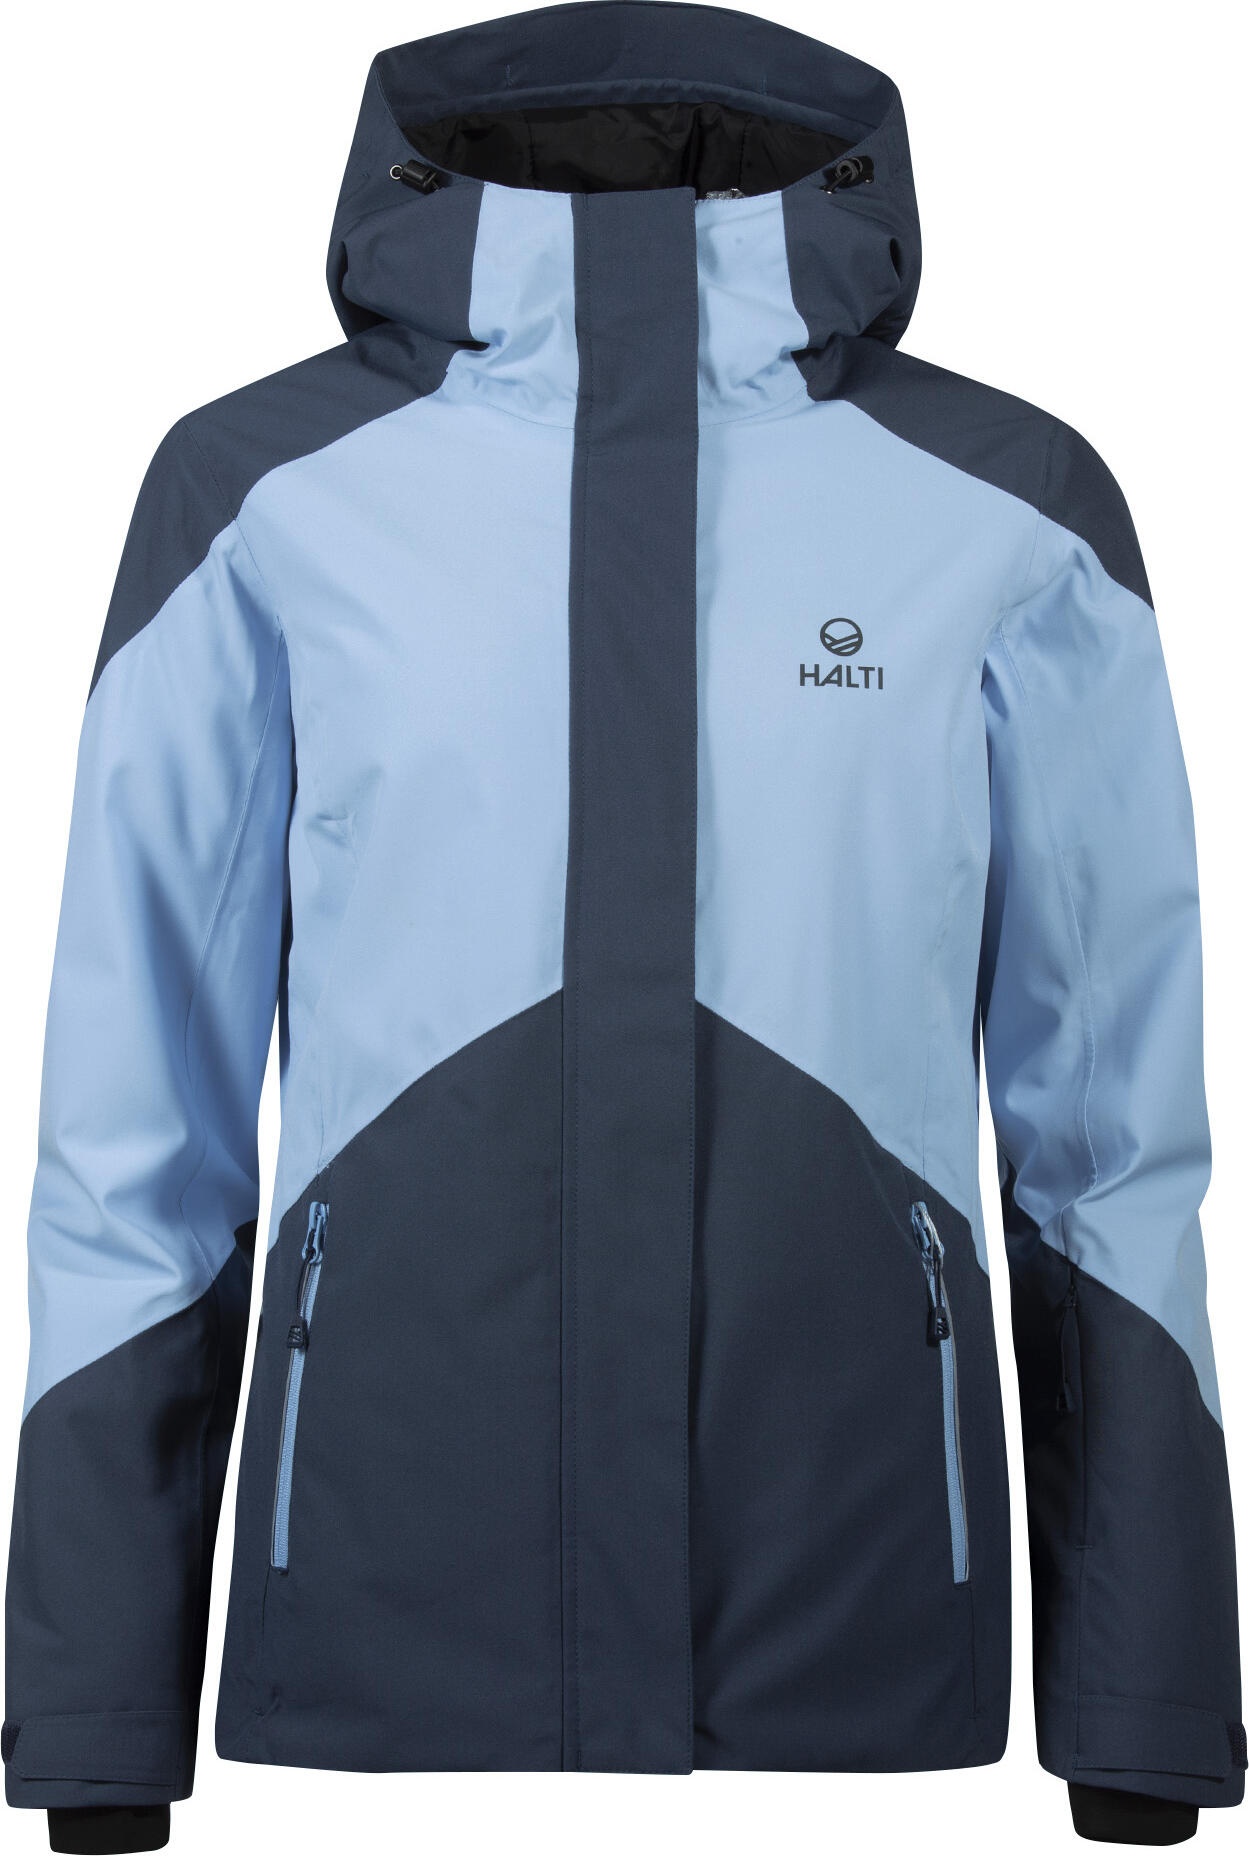 Halti Corinne W DX Ski Jacket placid blue (A32) 38